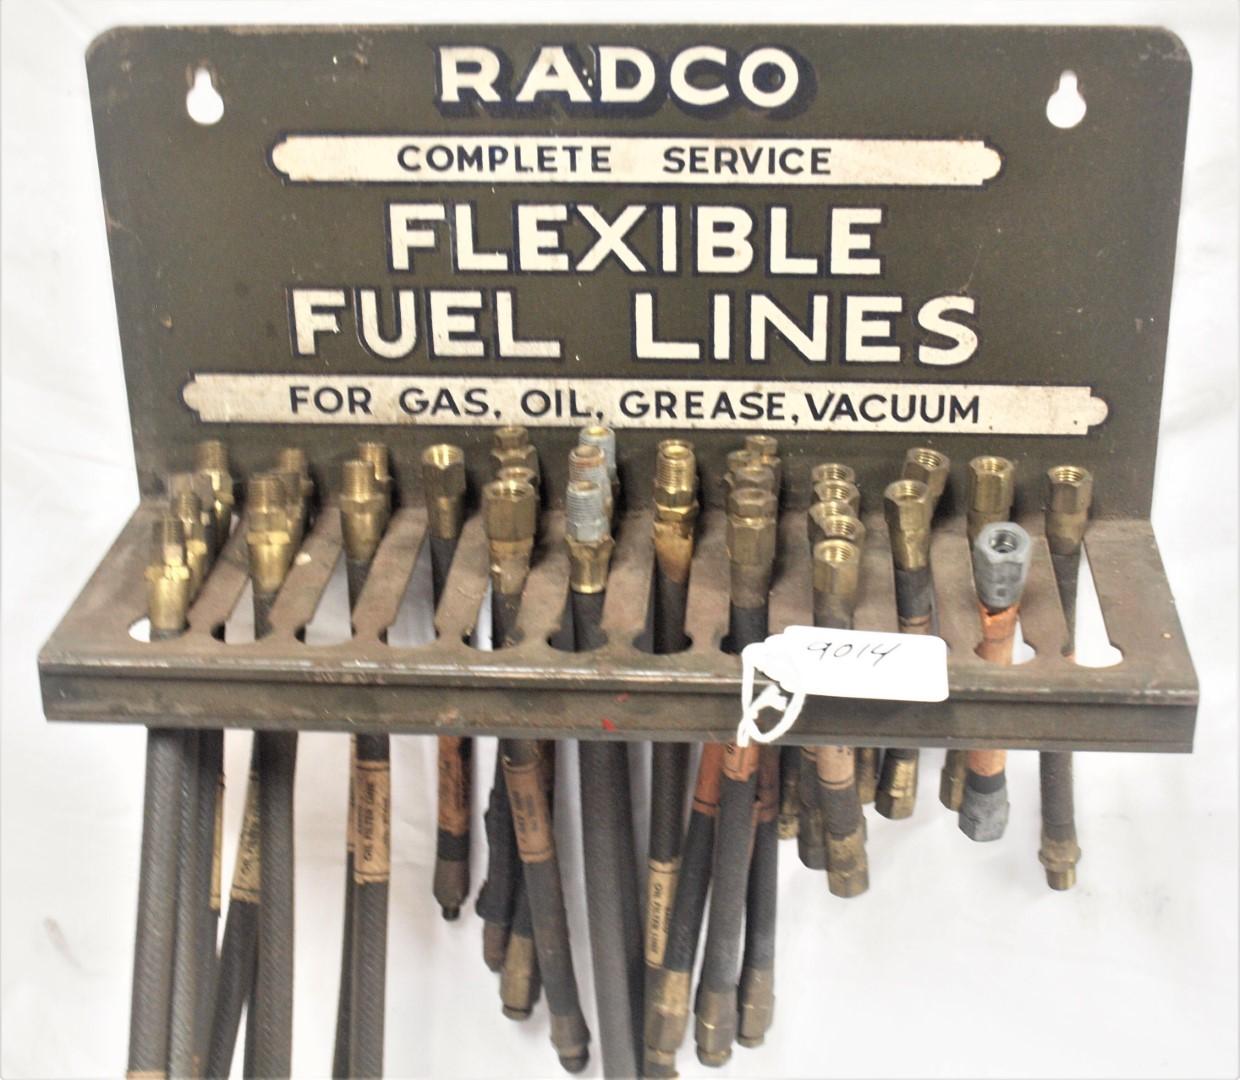 Radco Flexible Fuel Line Display